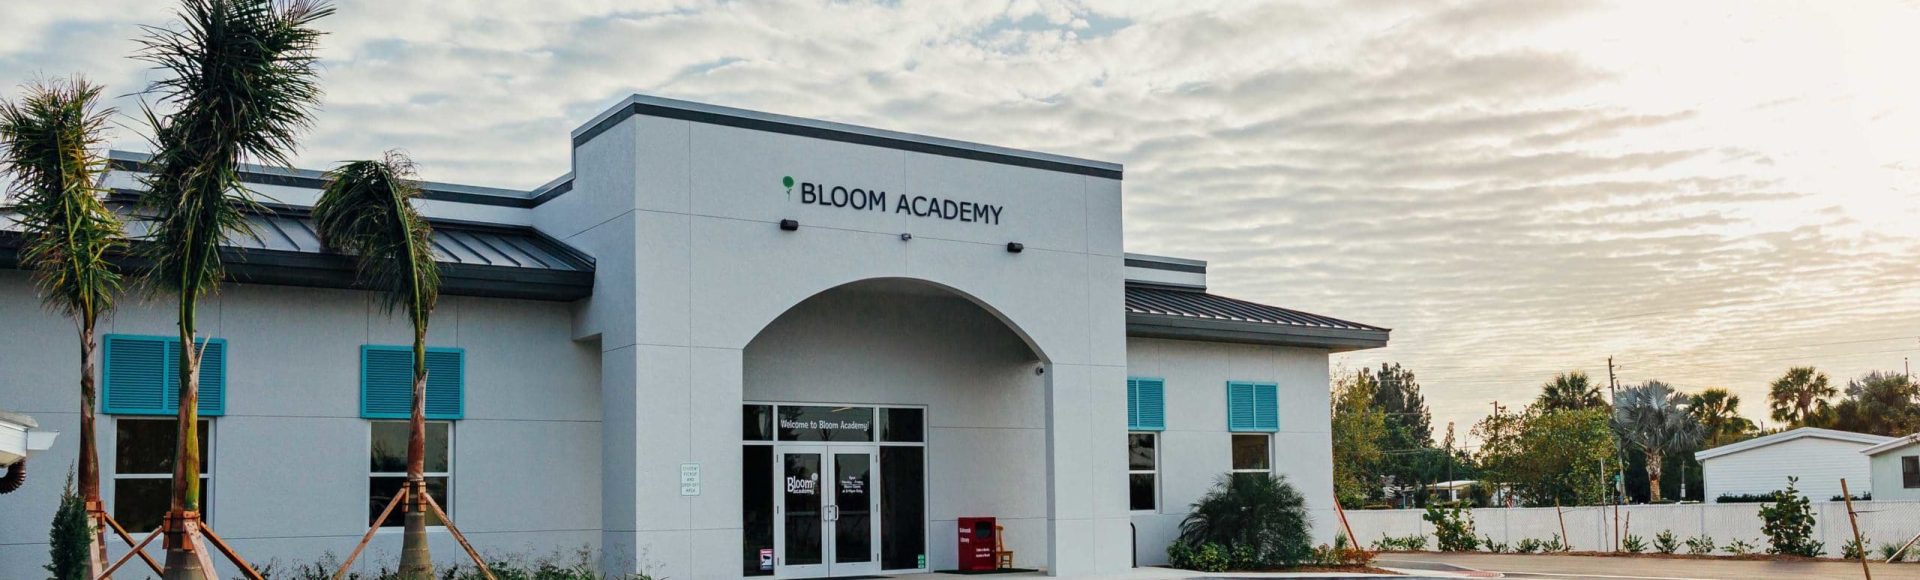 bloom-academy-punta-gorda-front-entrance